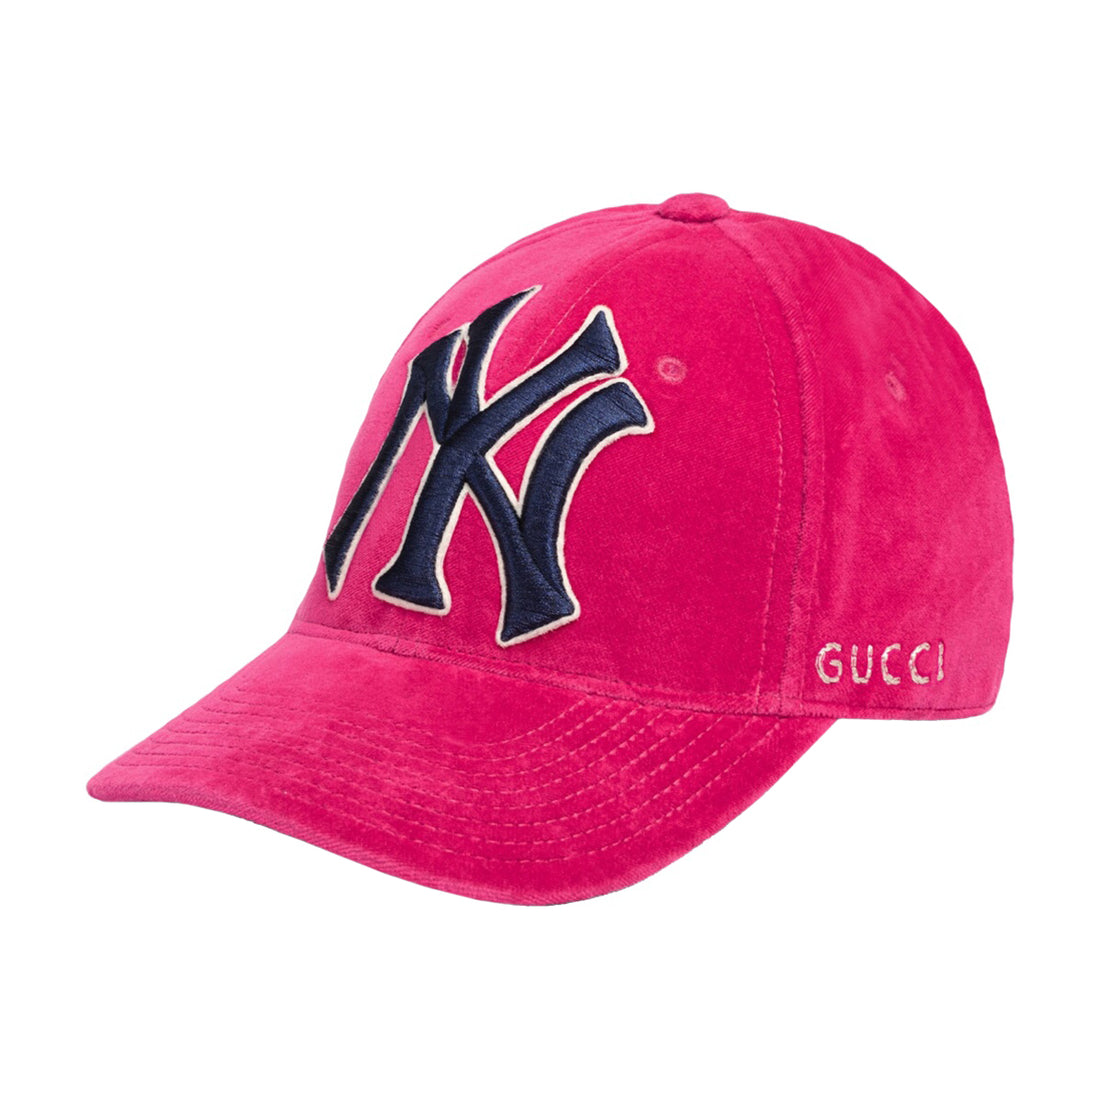 Gucci x NY Yankees Velvet Cap